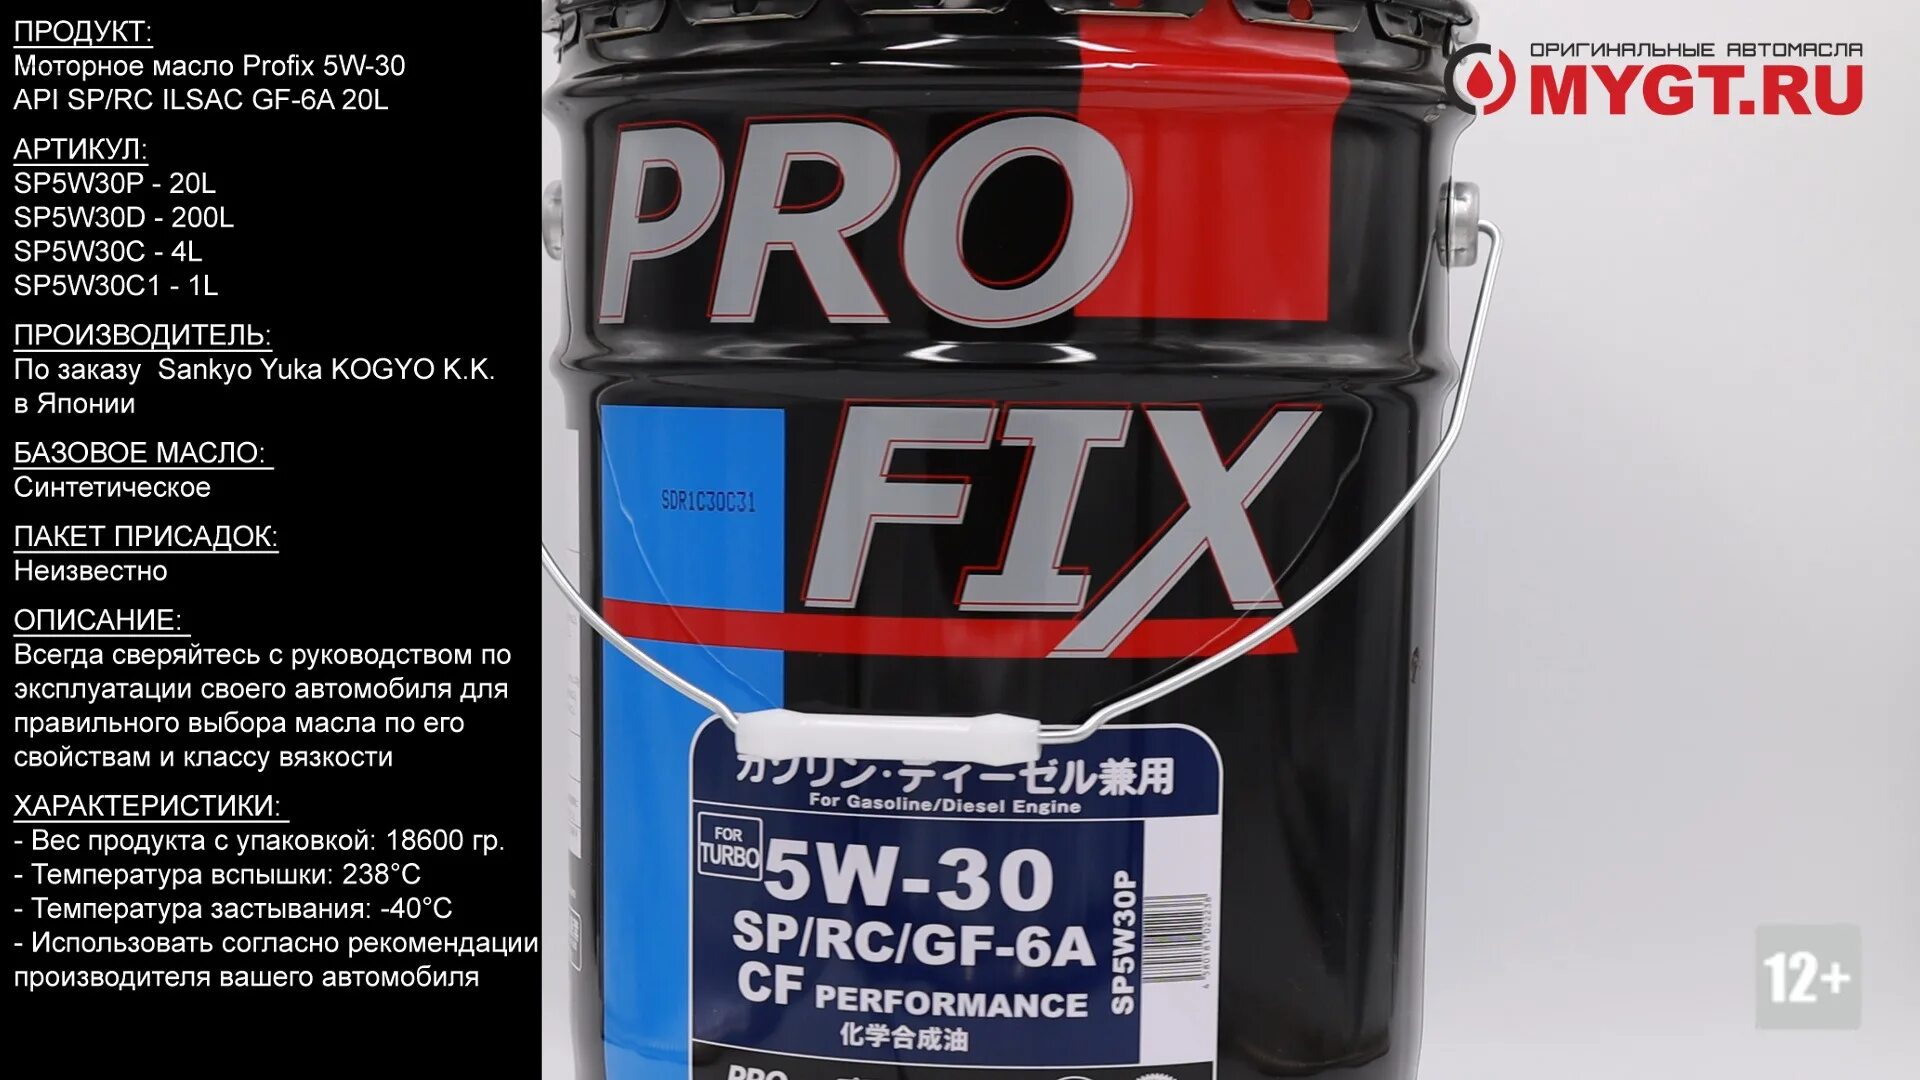 PROFIX SP/gf-6a 5w30. PROFIX 5w30 gf-6a. PROFIX 5w30 SP. Sp5w30c1 PROFIX.